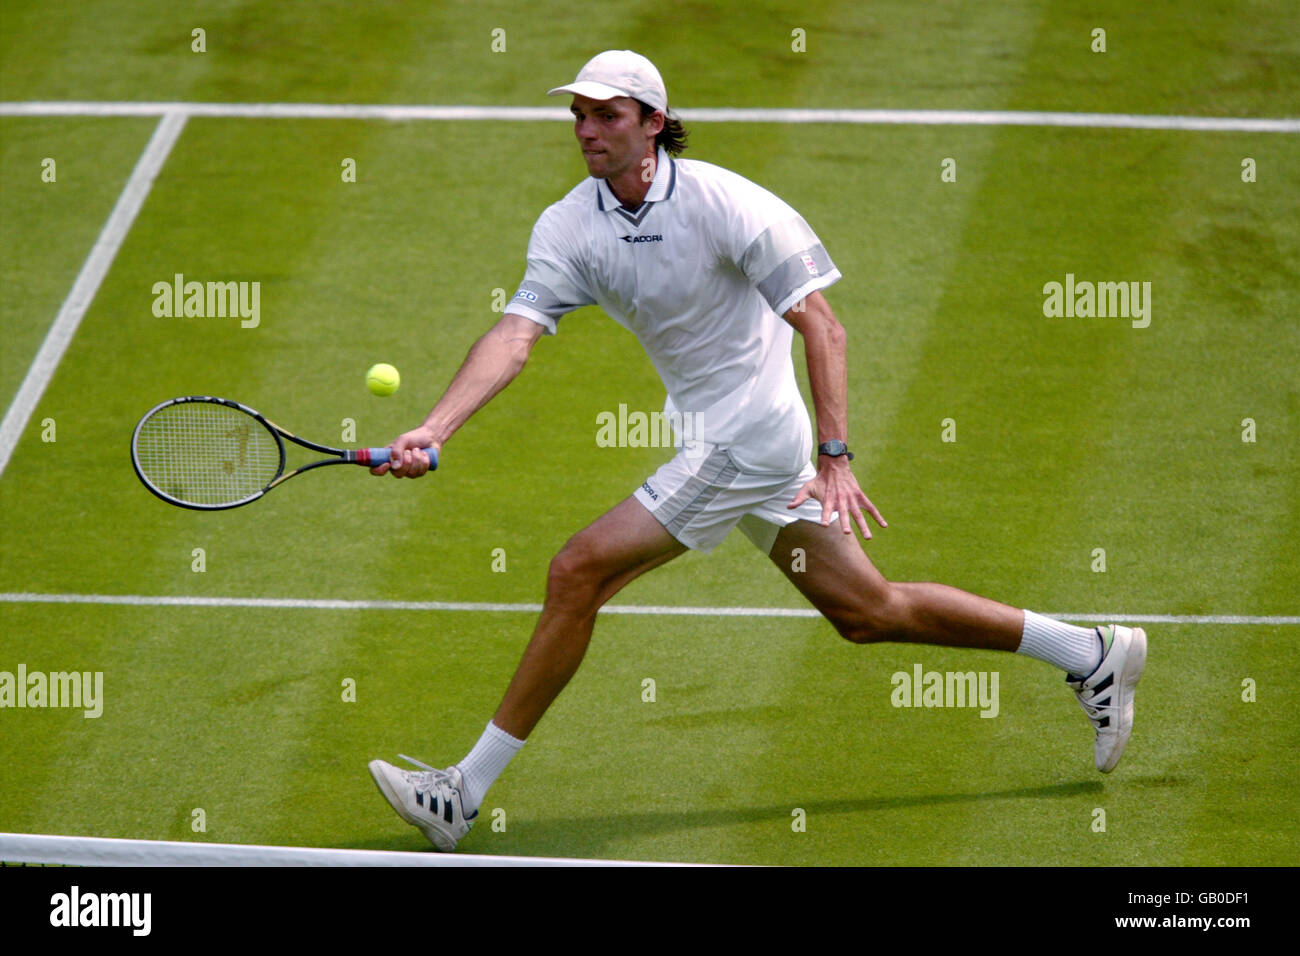 Tennis - Wimbledon 2003 - Men's First Round - Lleyton Hewitt v Ivo Karlovic  Stock Photo - Alamy